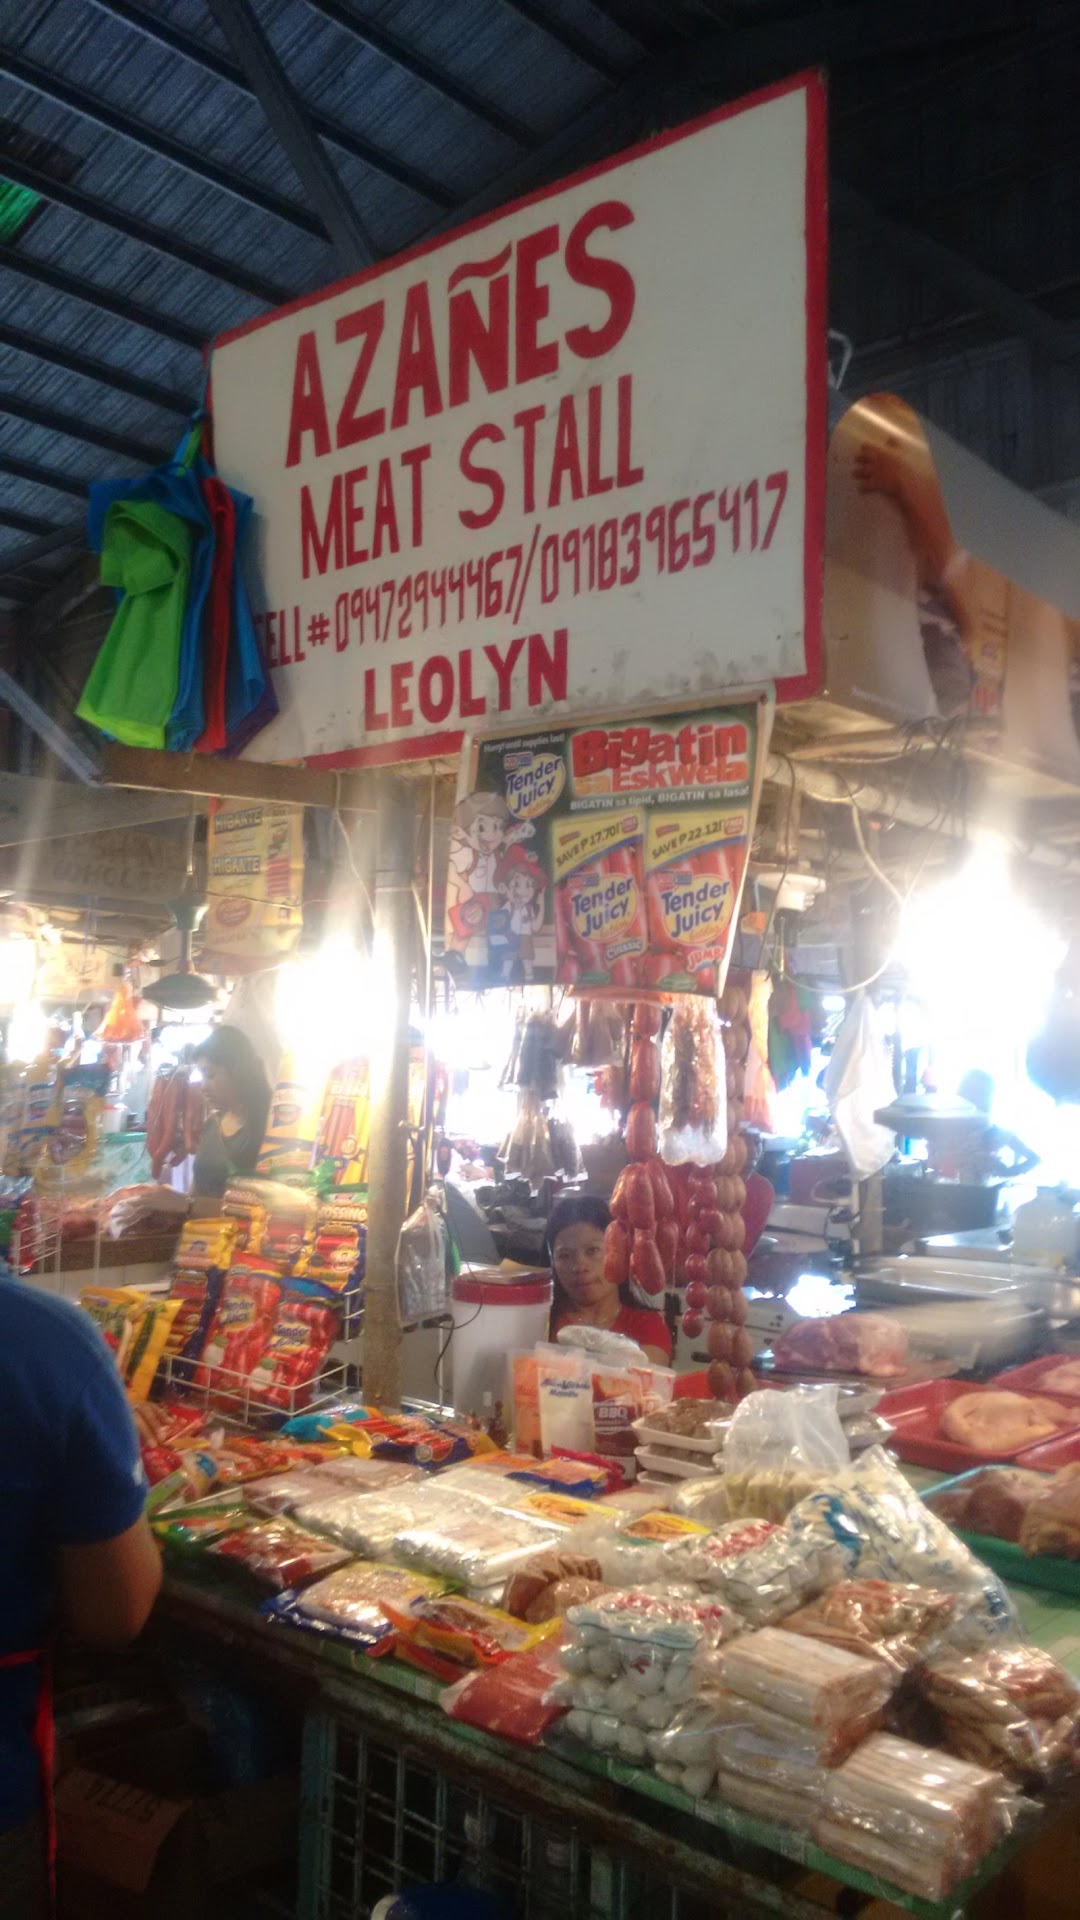 Azañes Meat Stall